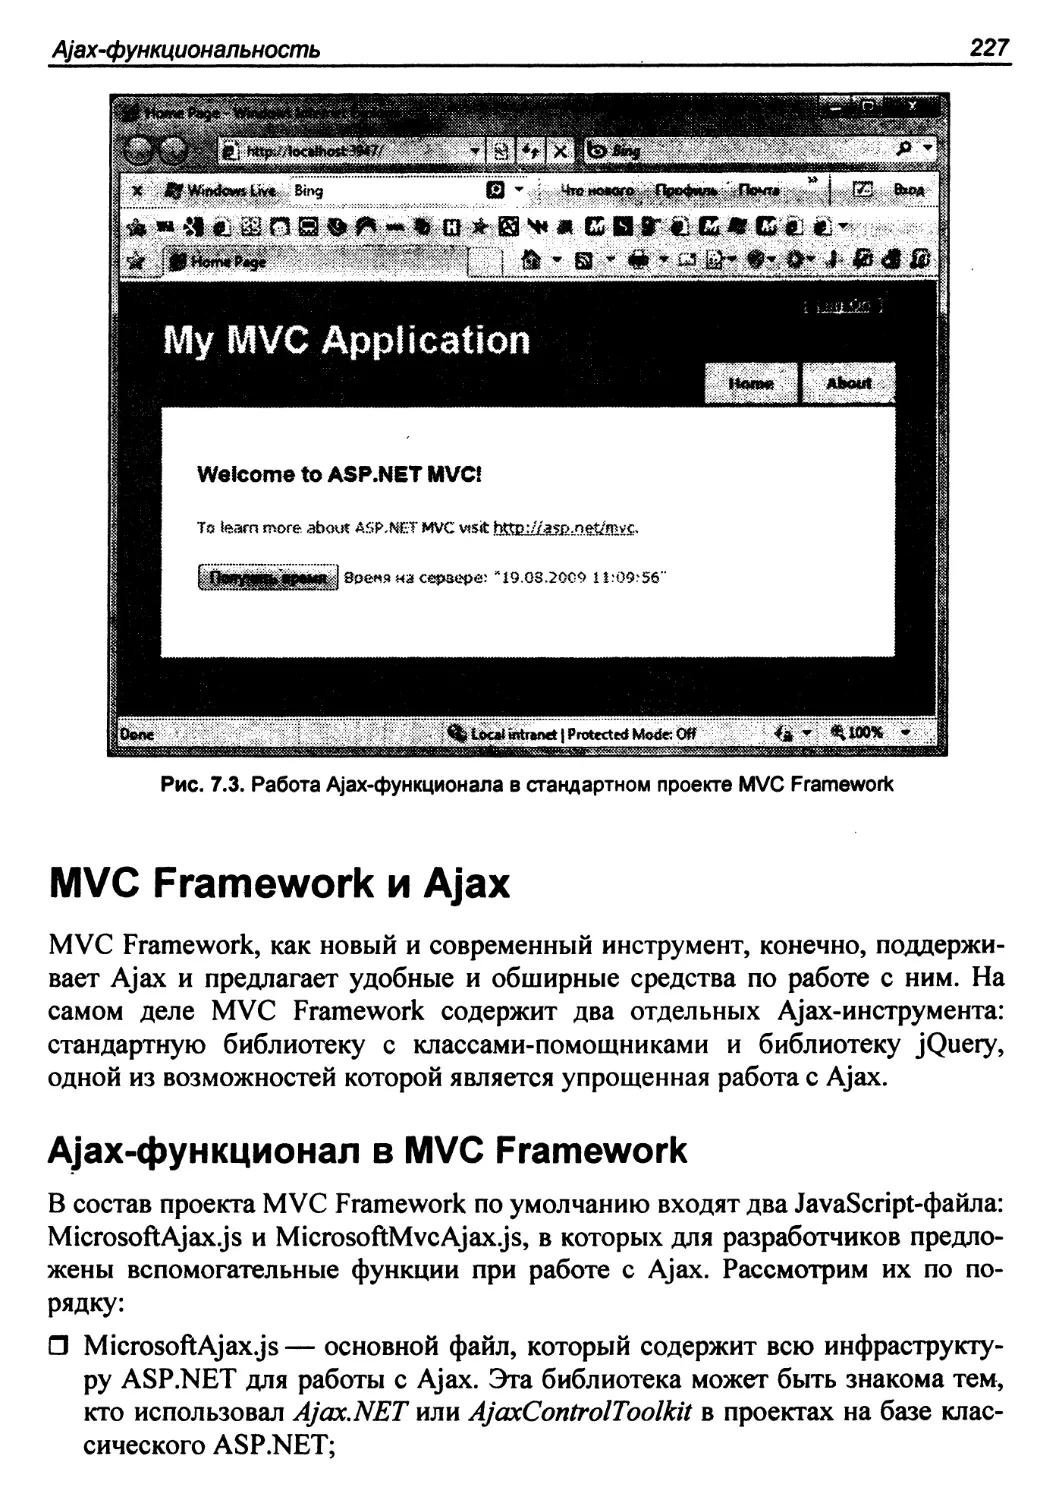 MVC Framework и Ajax